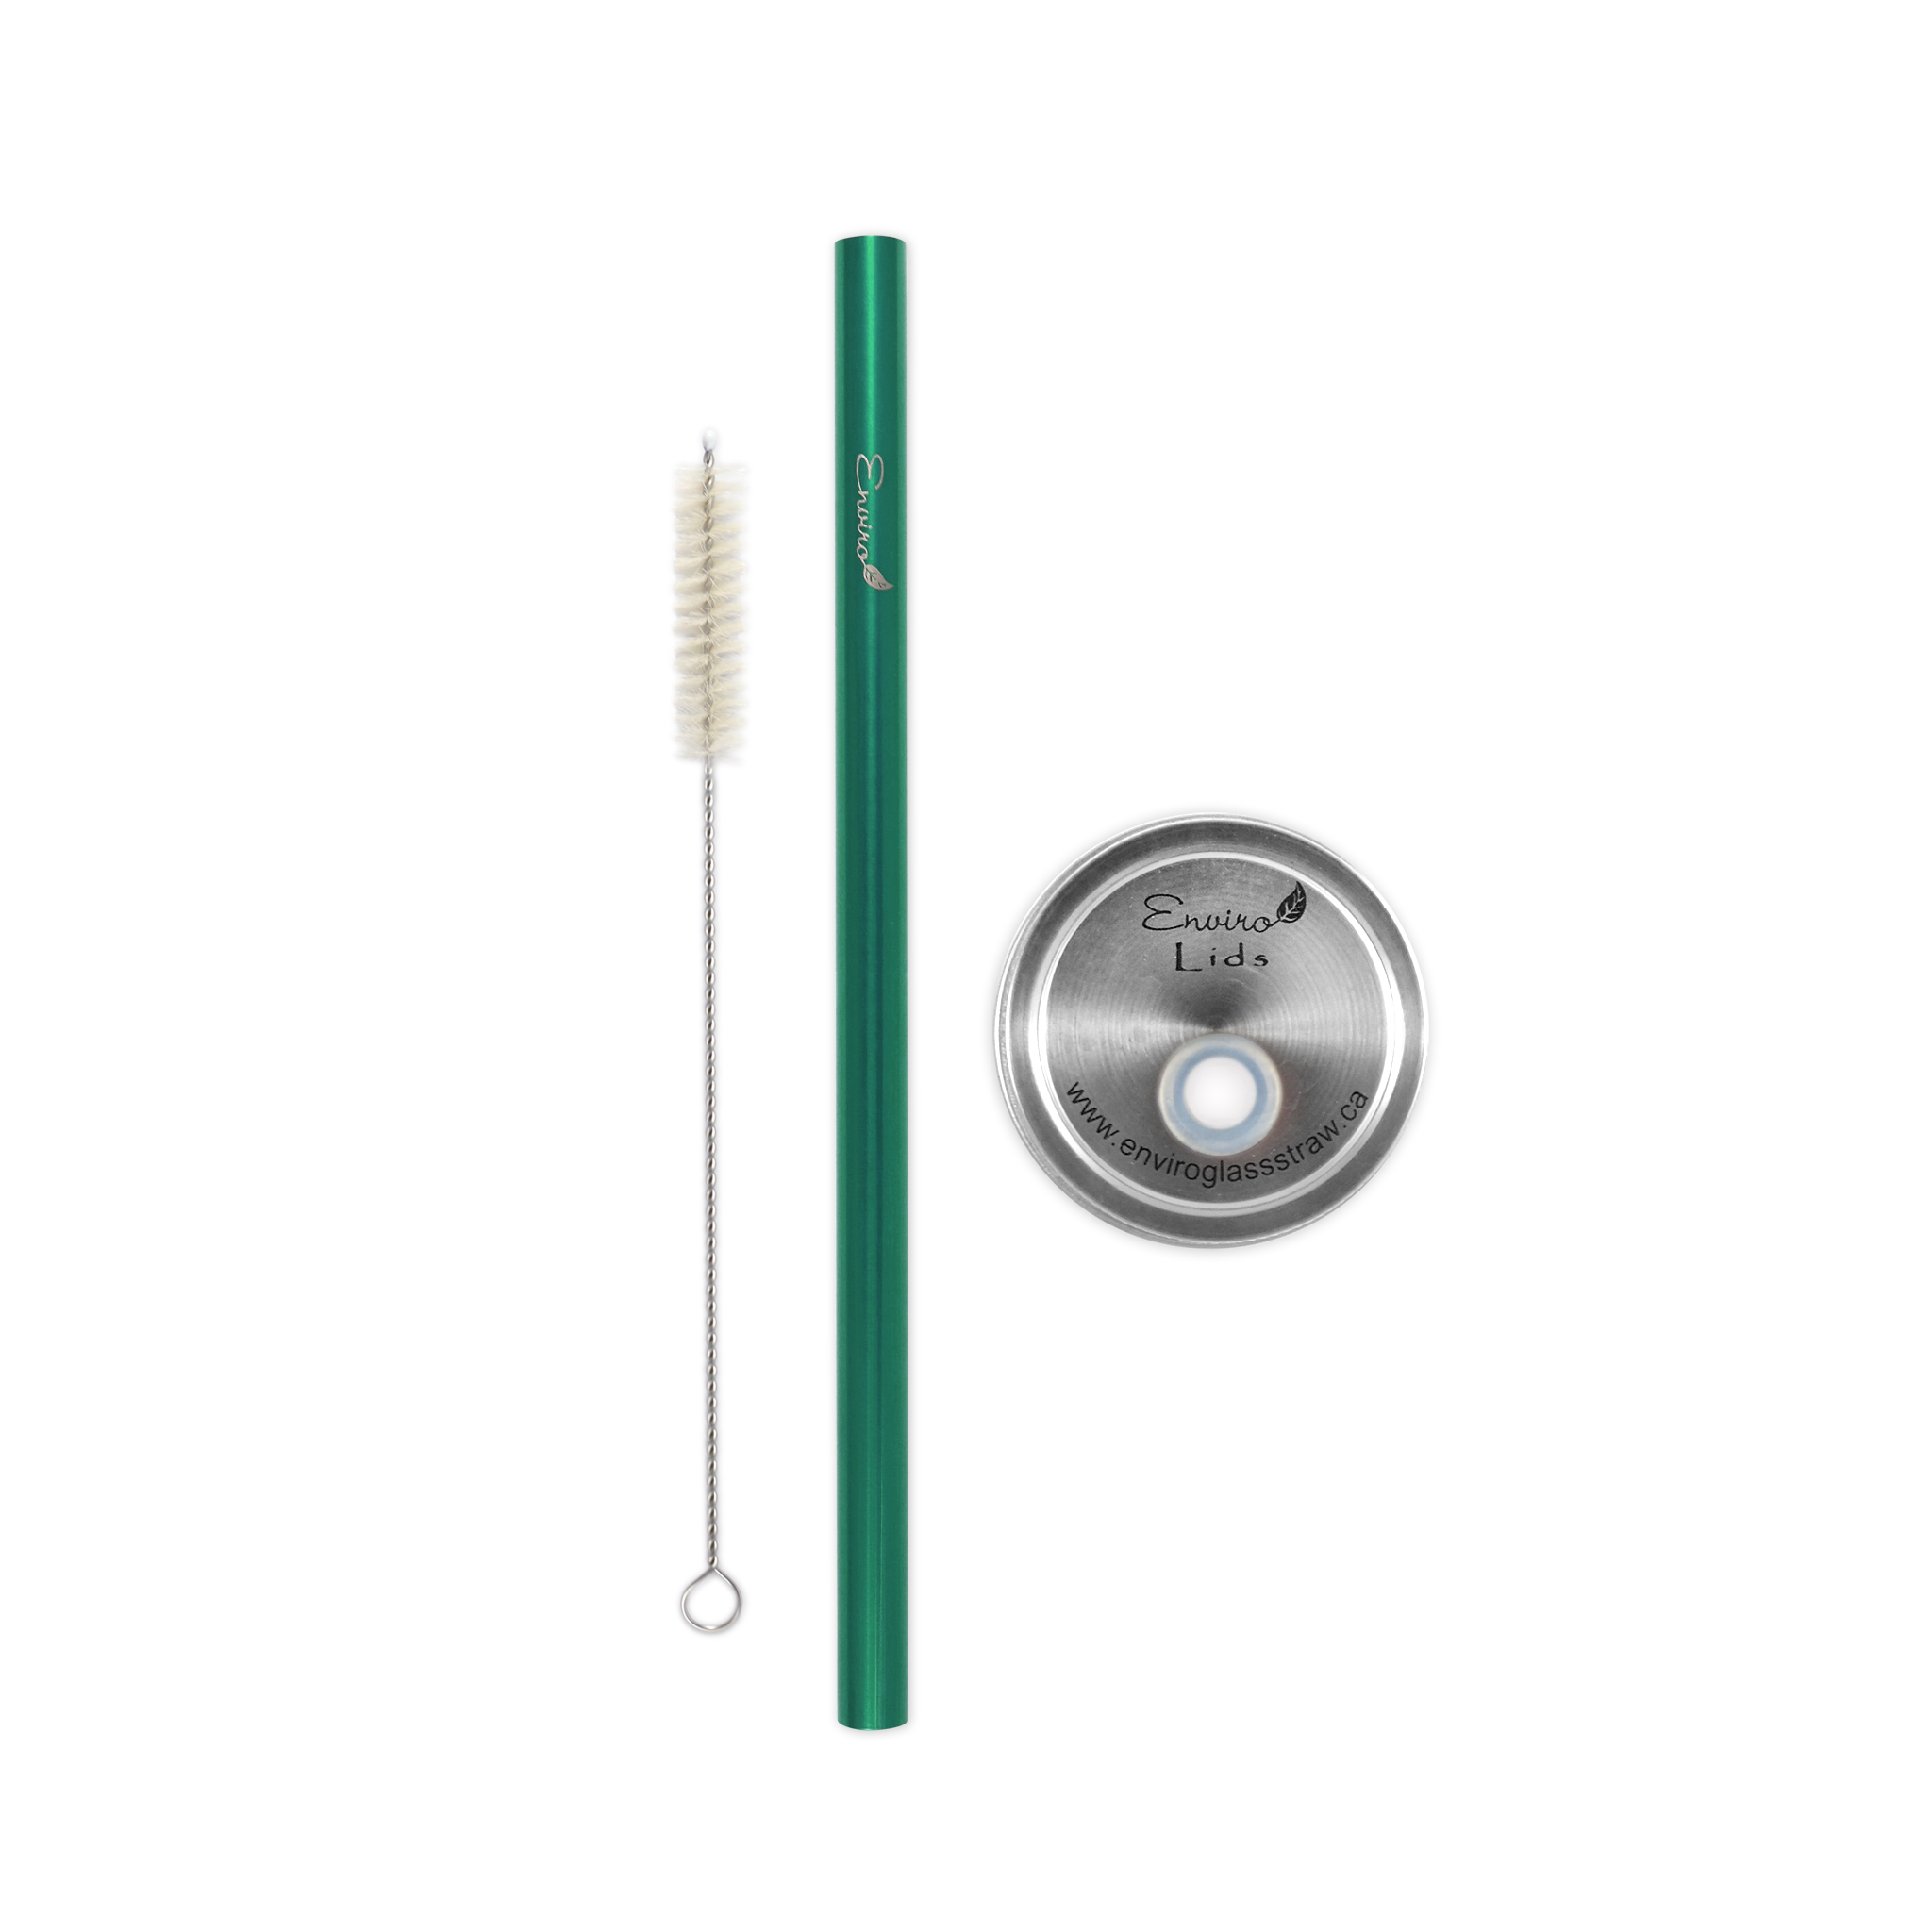 Family Pack - 4 Regular Glass Straws (9.5 mm Diameter) with Cleaning B –  Enviro Glass Straw Ltd.